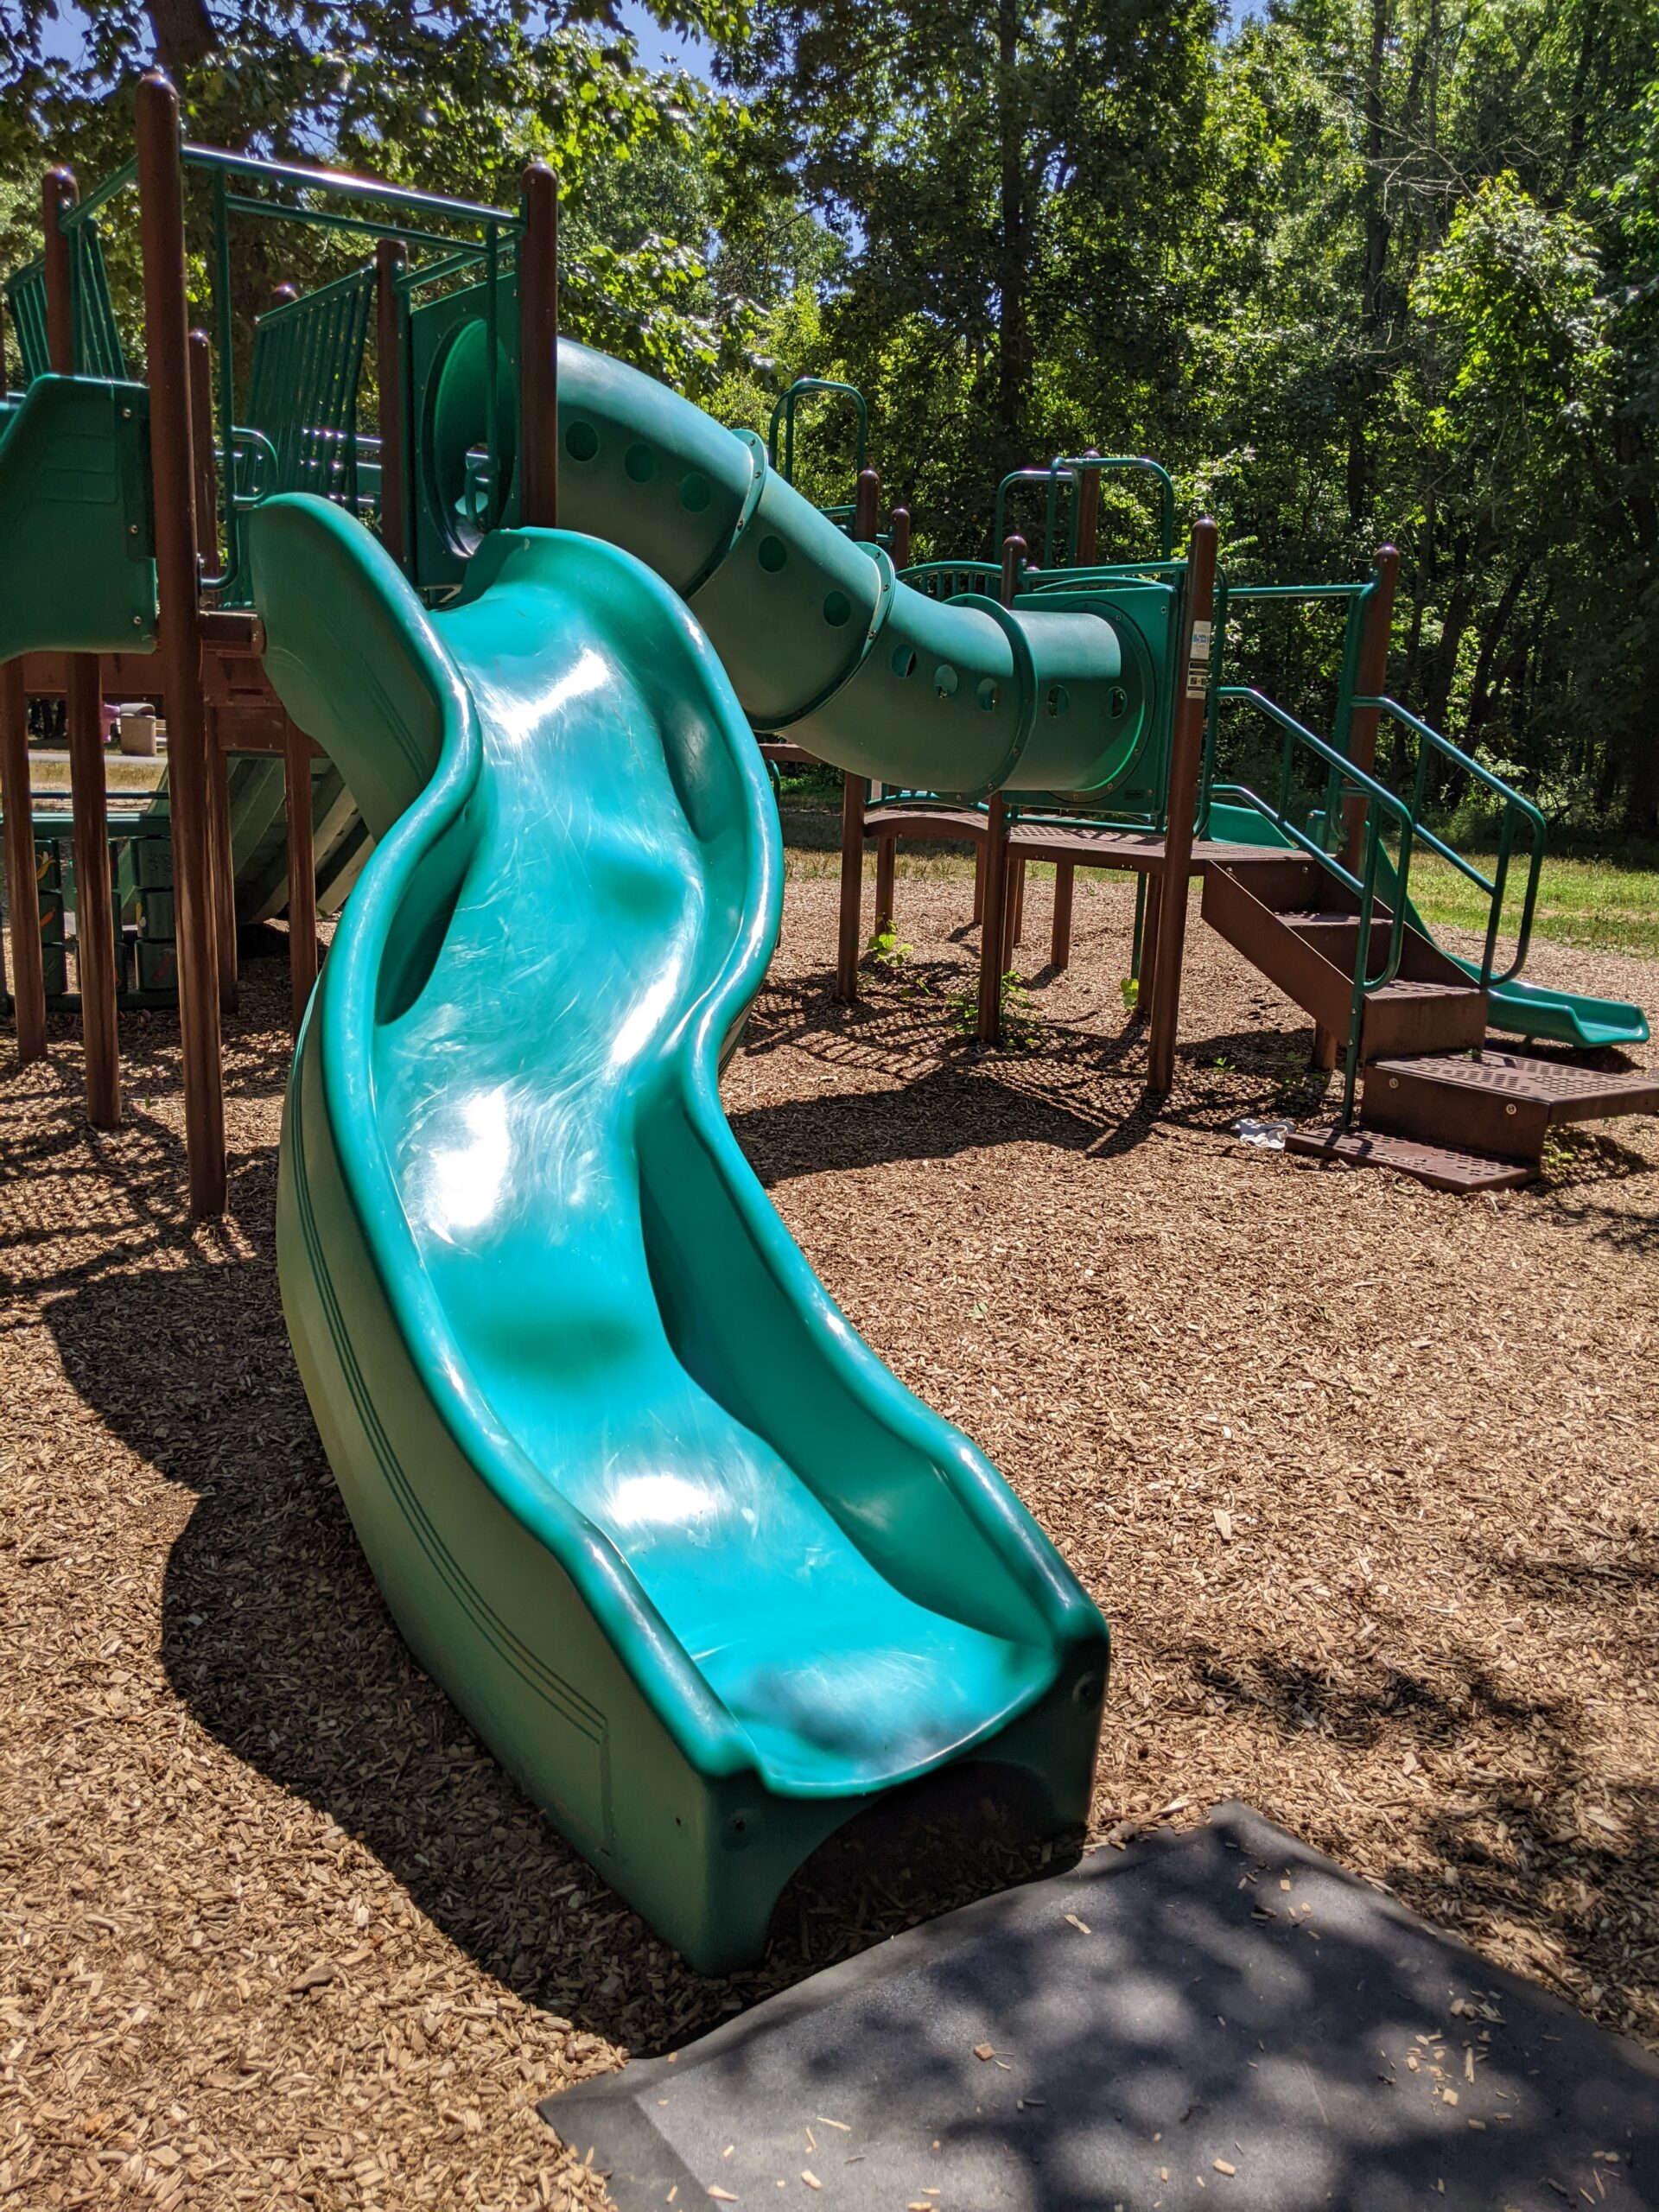 Children's Park Playground at Veteran's Park in Hamilton Township NJ - SLIDES - curvy green slide on green playground